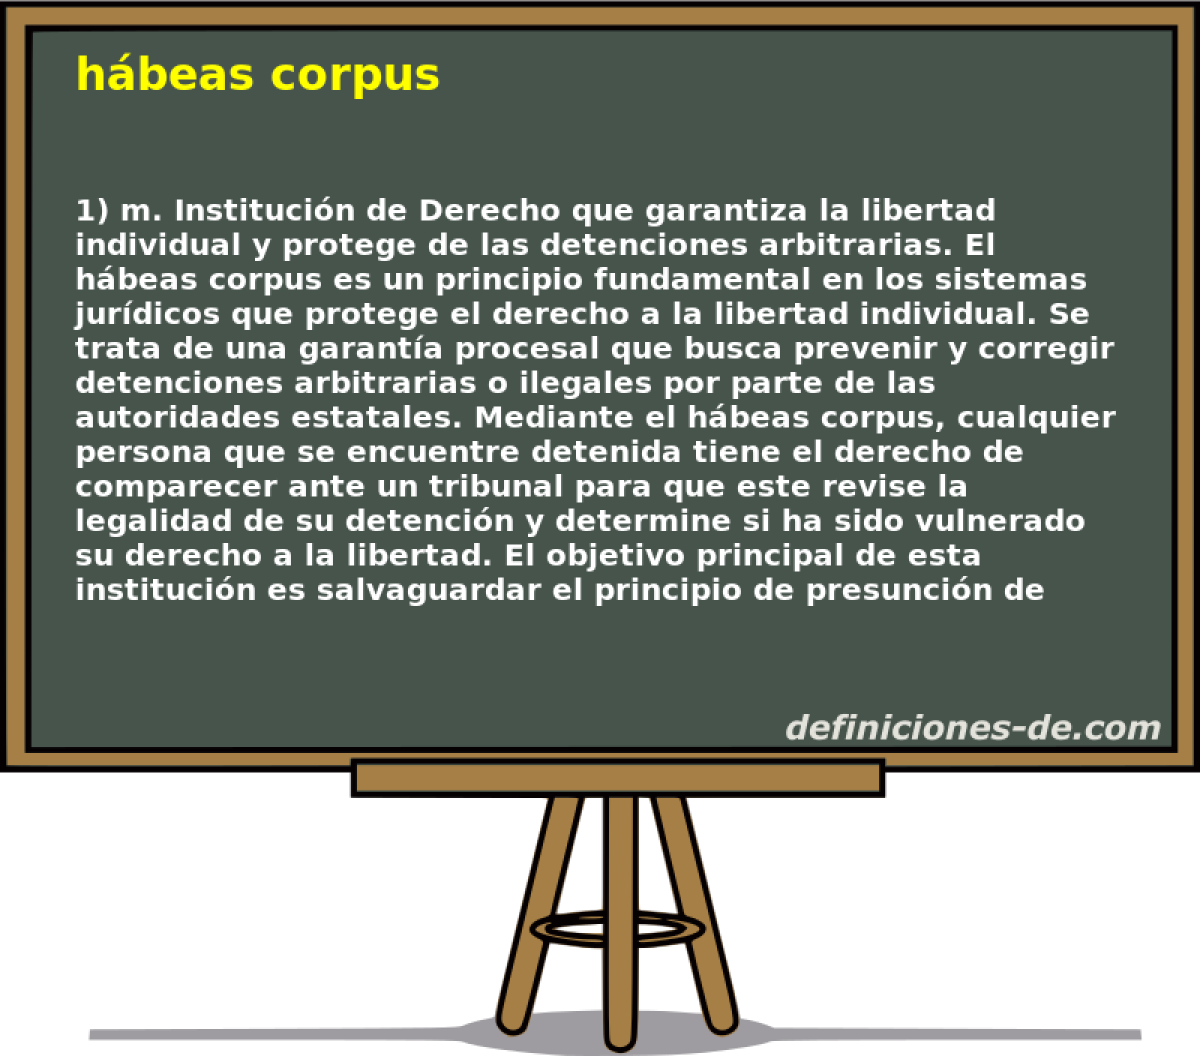 hbeas corpus 